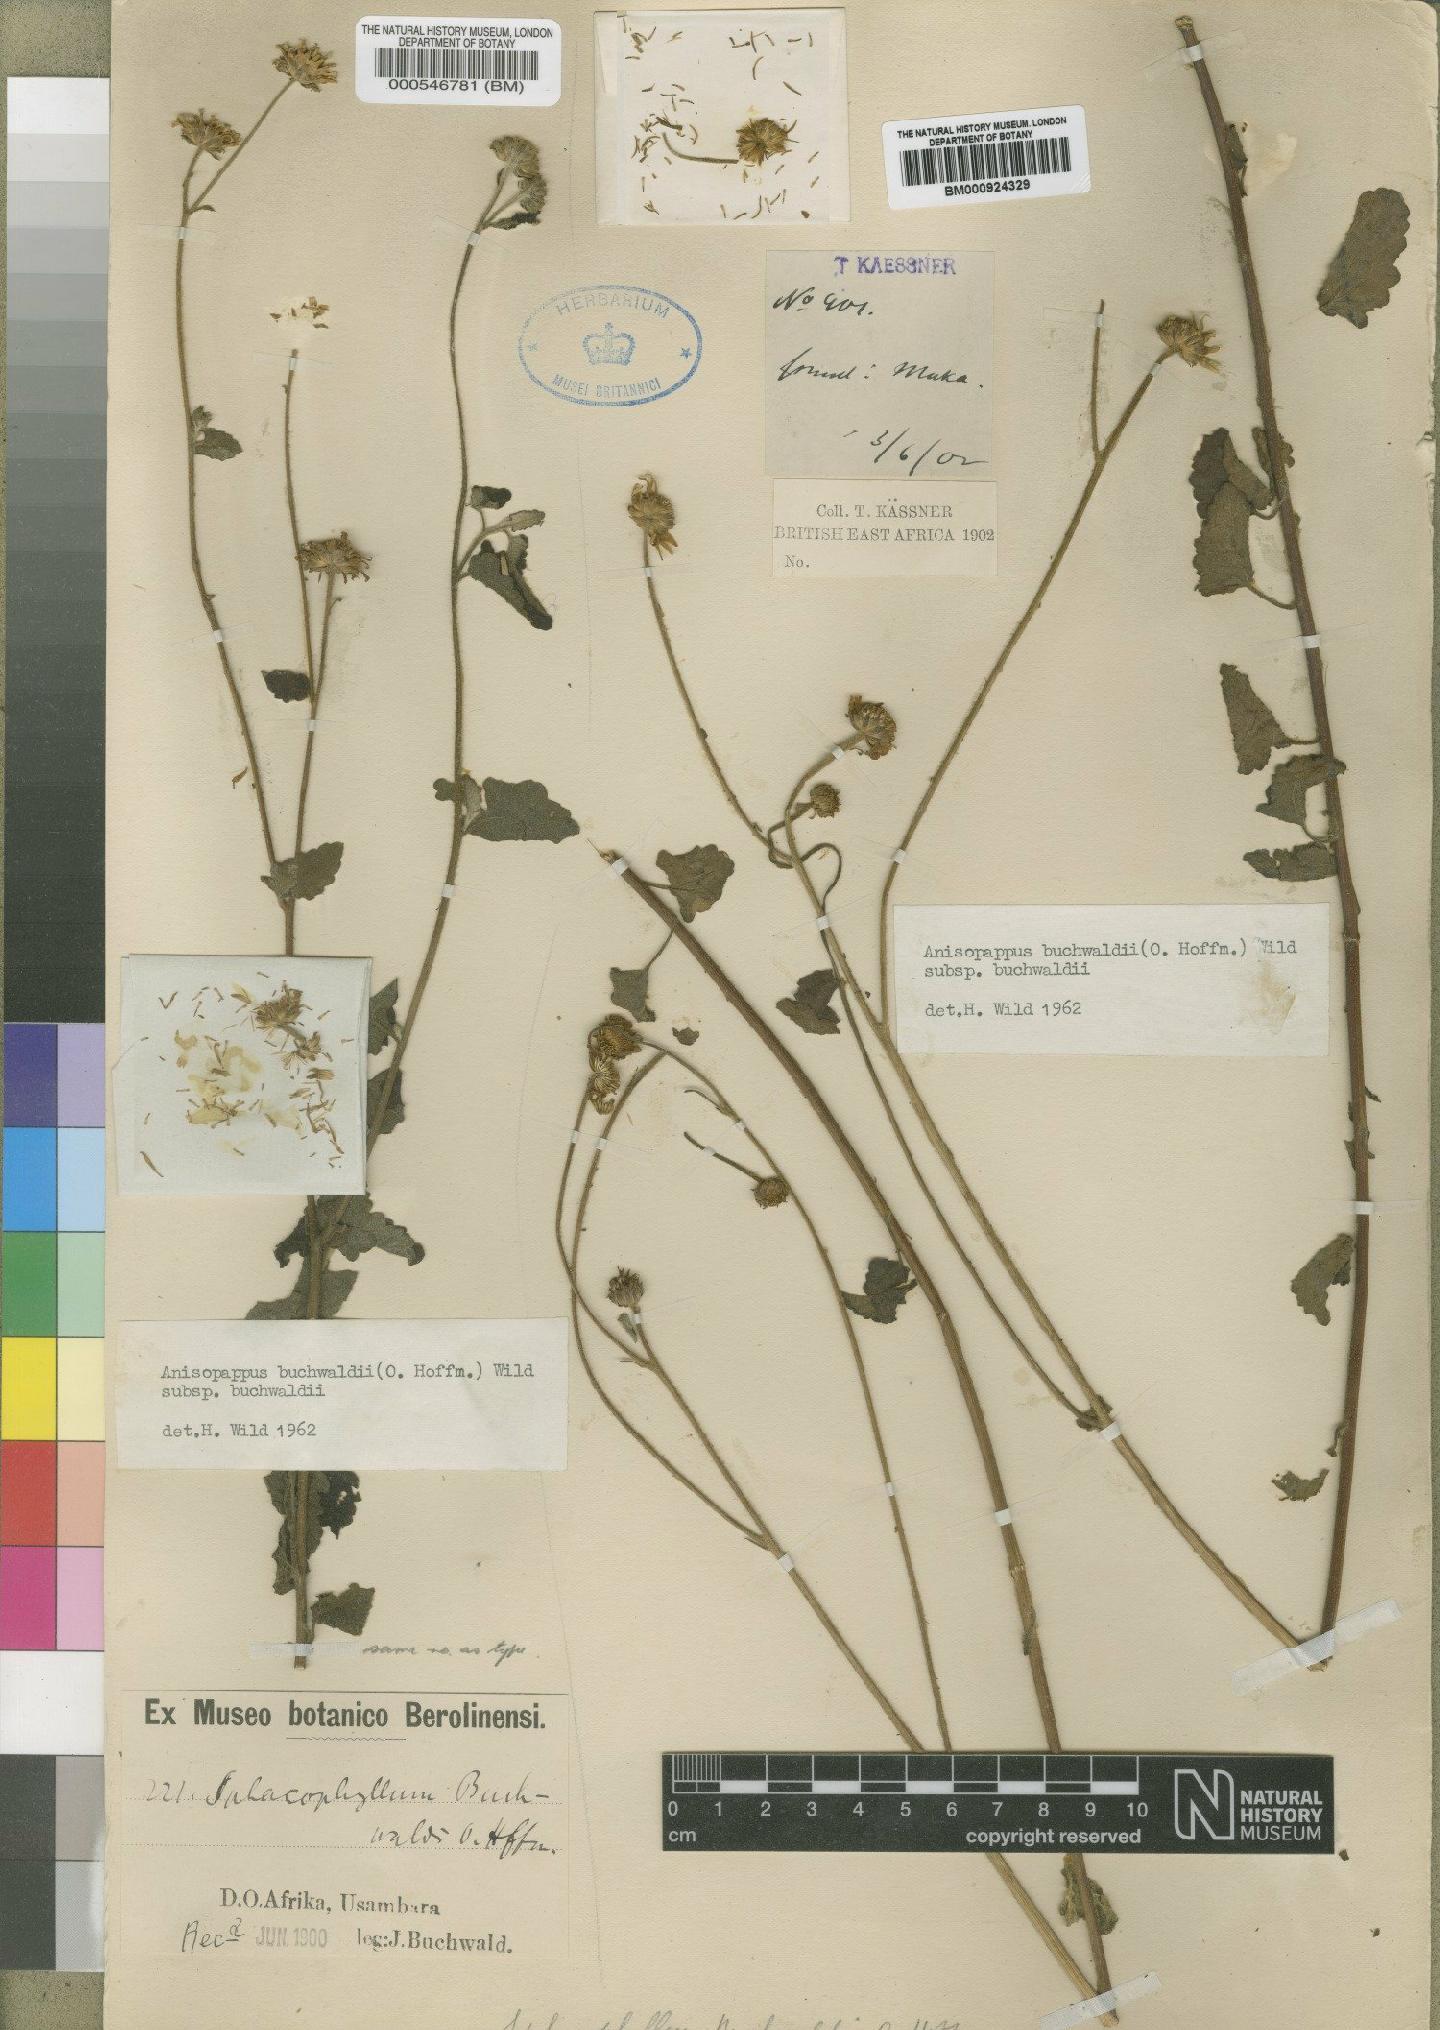 To NHMUK collection (Anisopappus buchwaldii (O.Hoffm.) Wild; Isotype; NHMUK:ecatalogue:4528513)